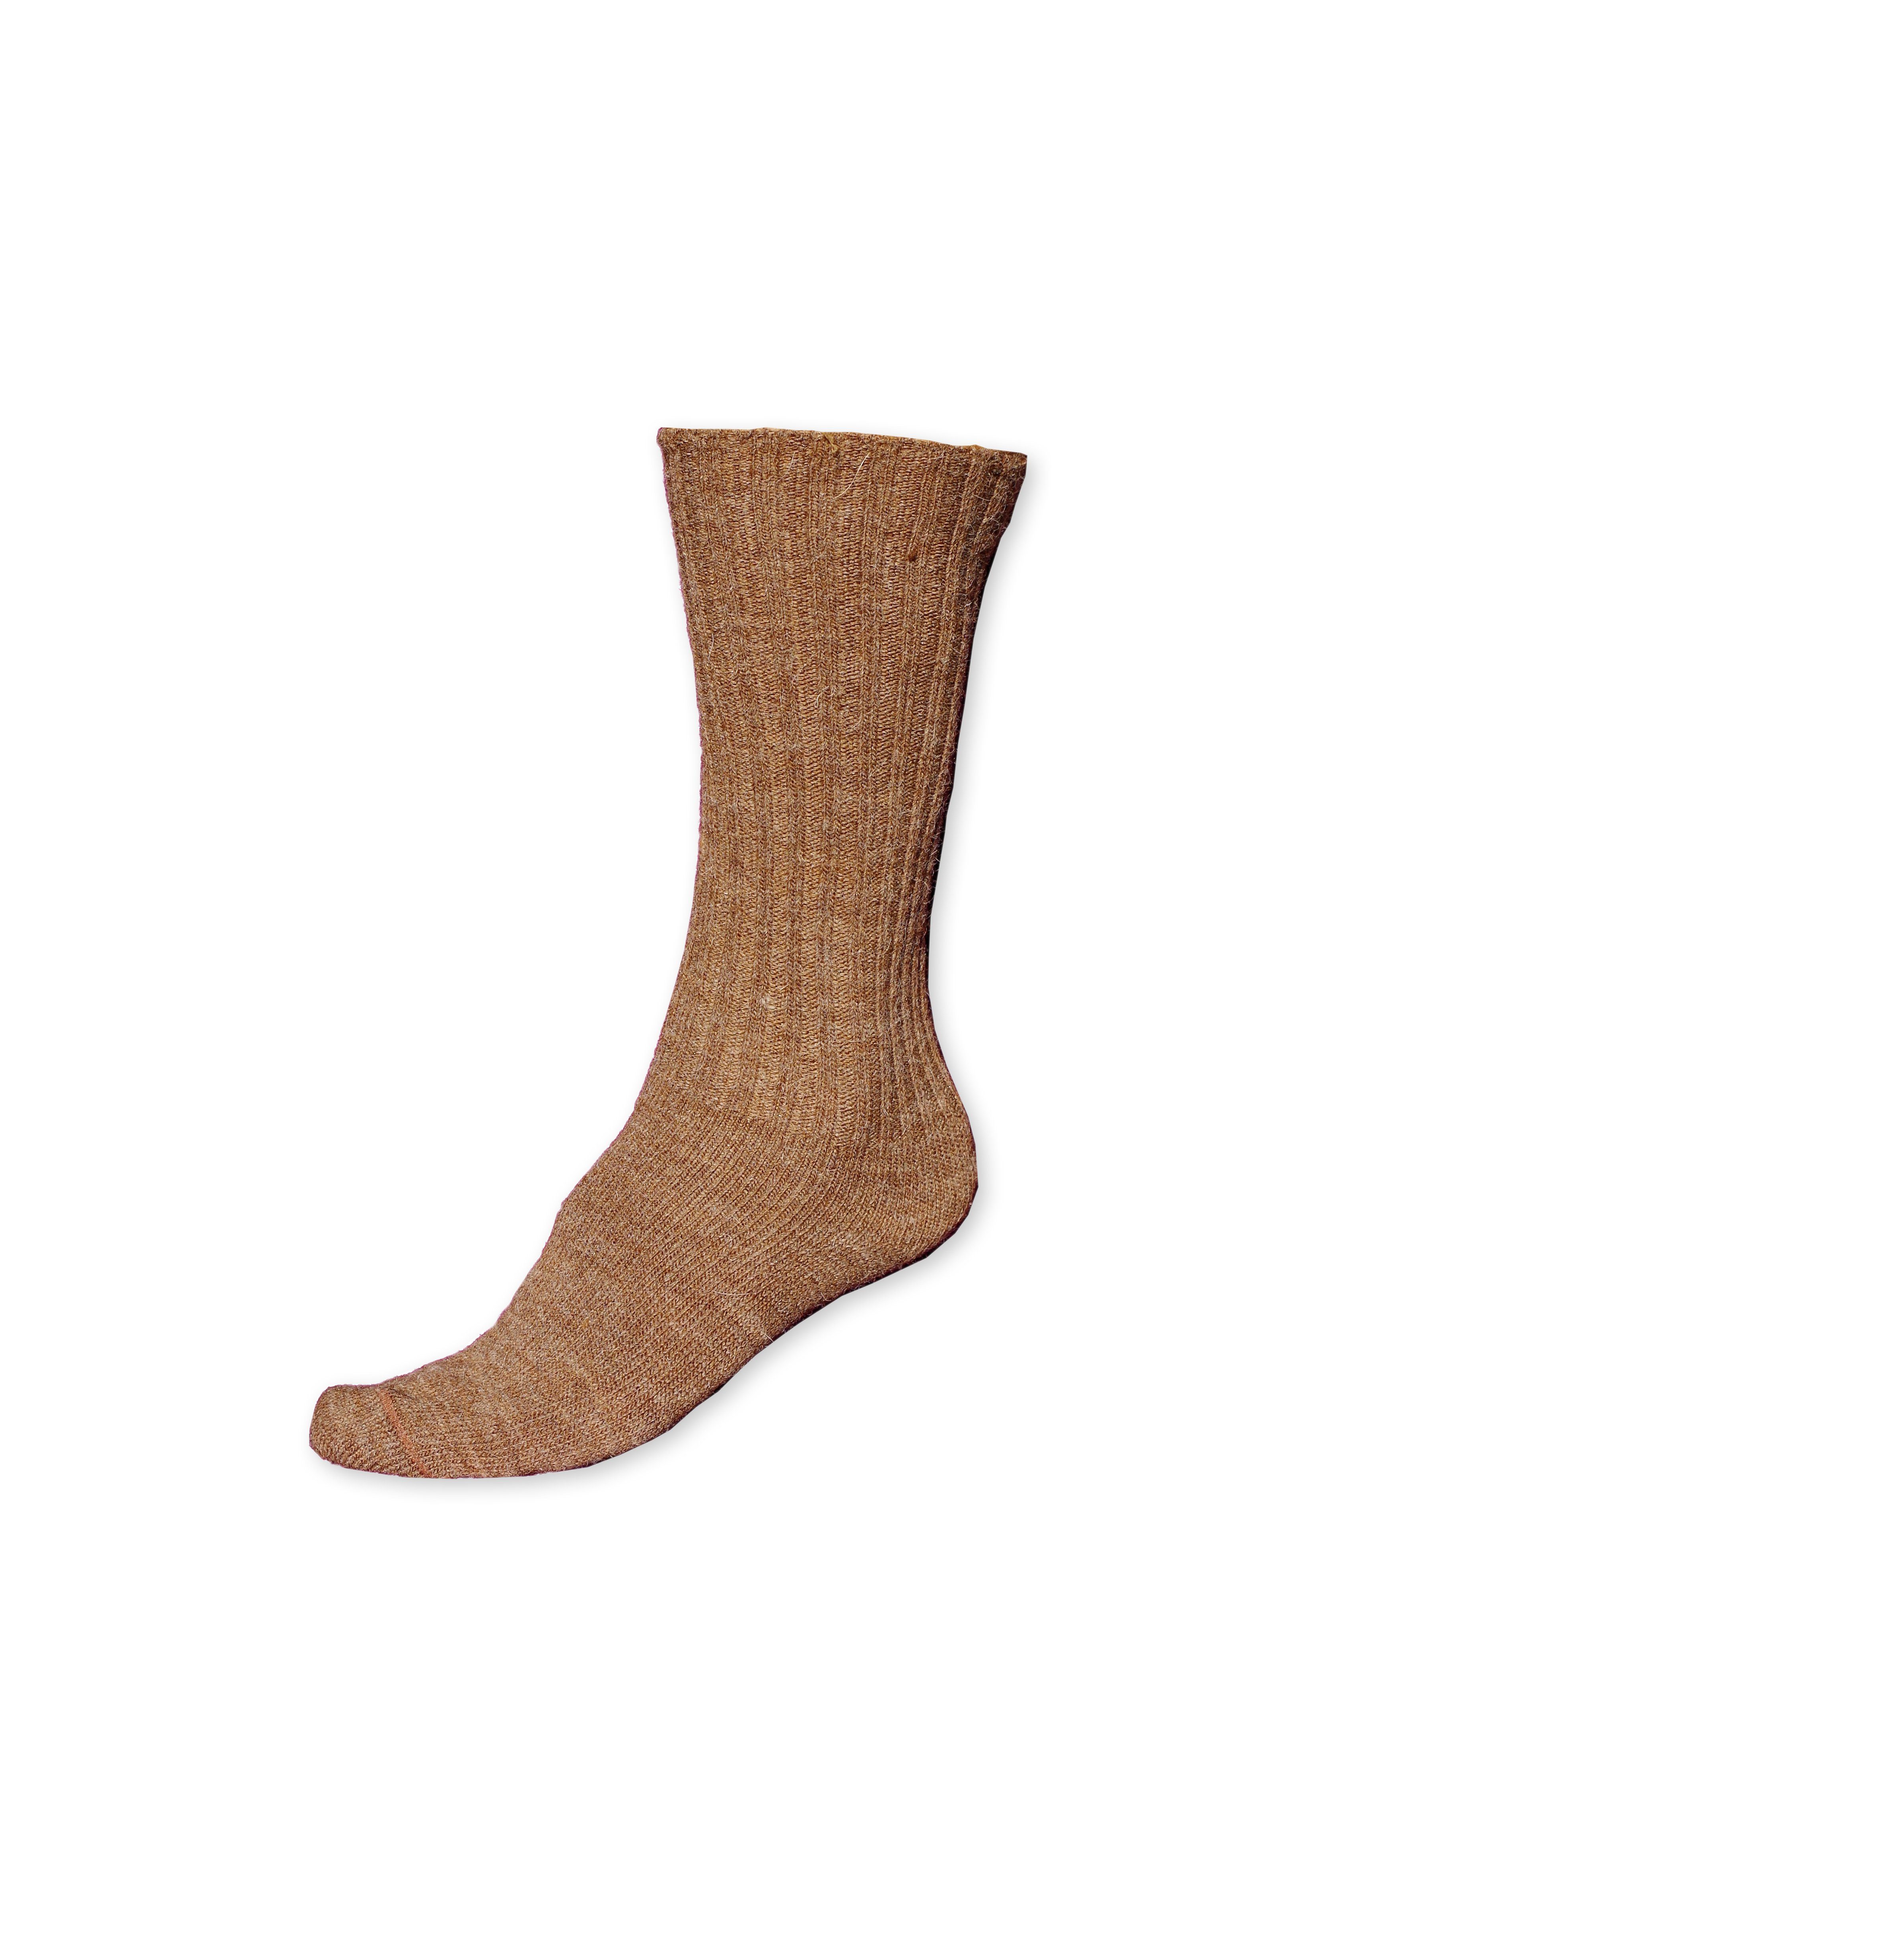 Calzedere 3 (3-Paar) Socken braun Posh Gear Alpaka Socken Paar